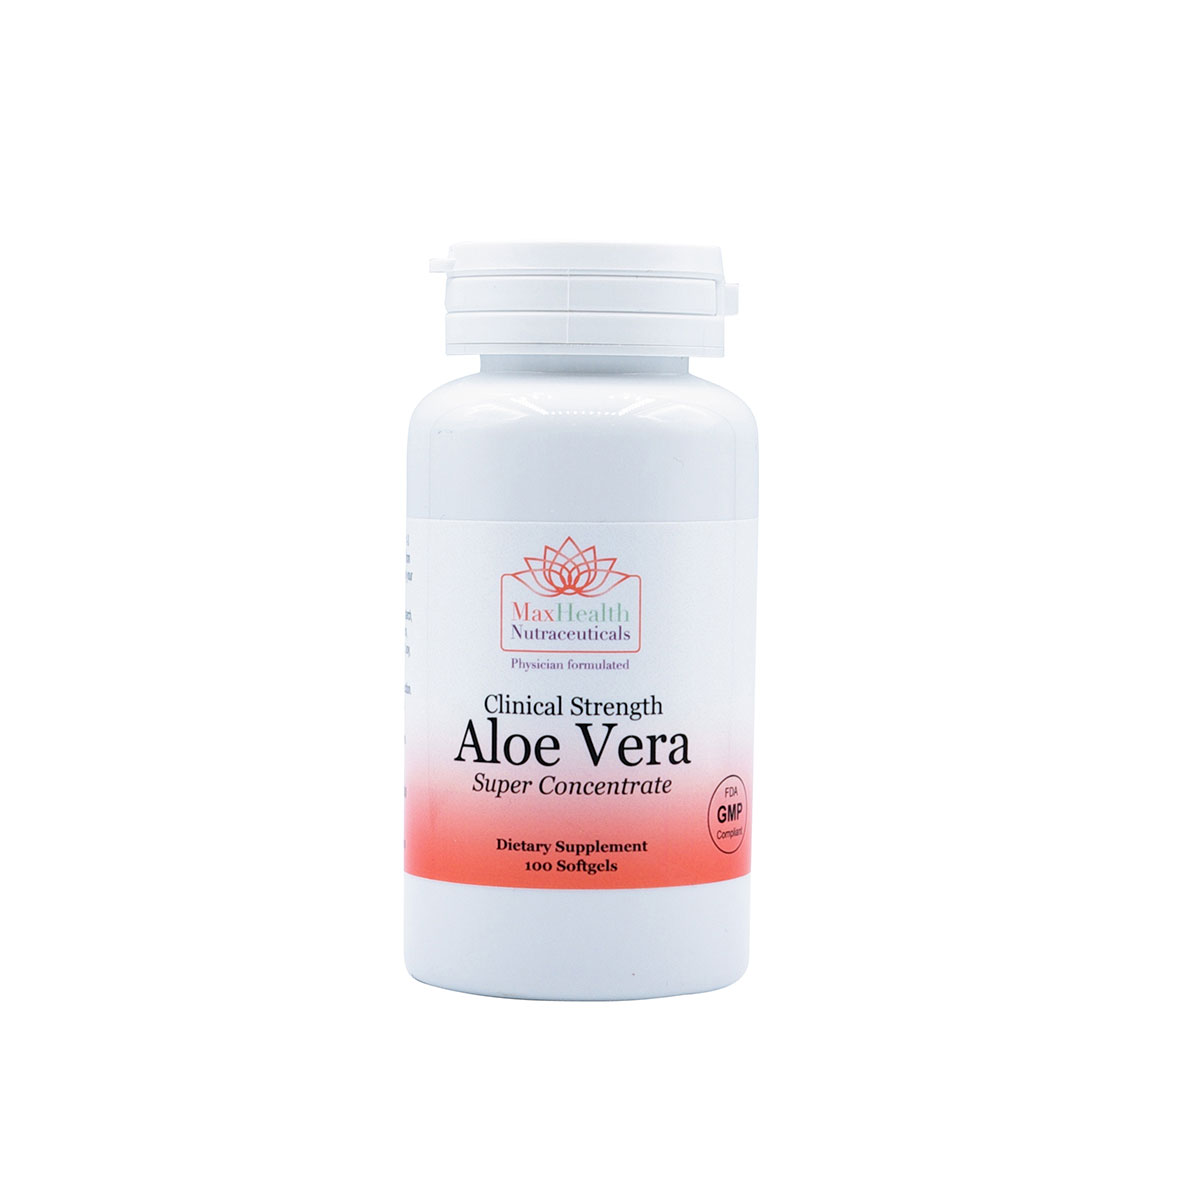 11Clinical Strength Aloe Vera Super Concentrate